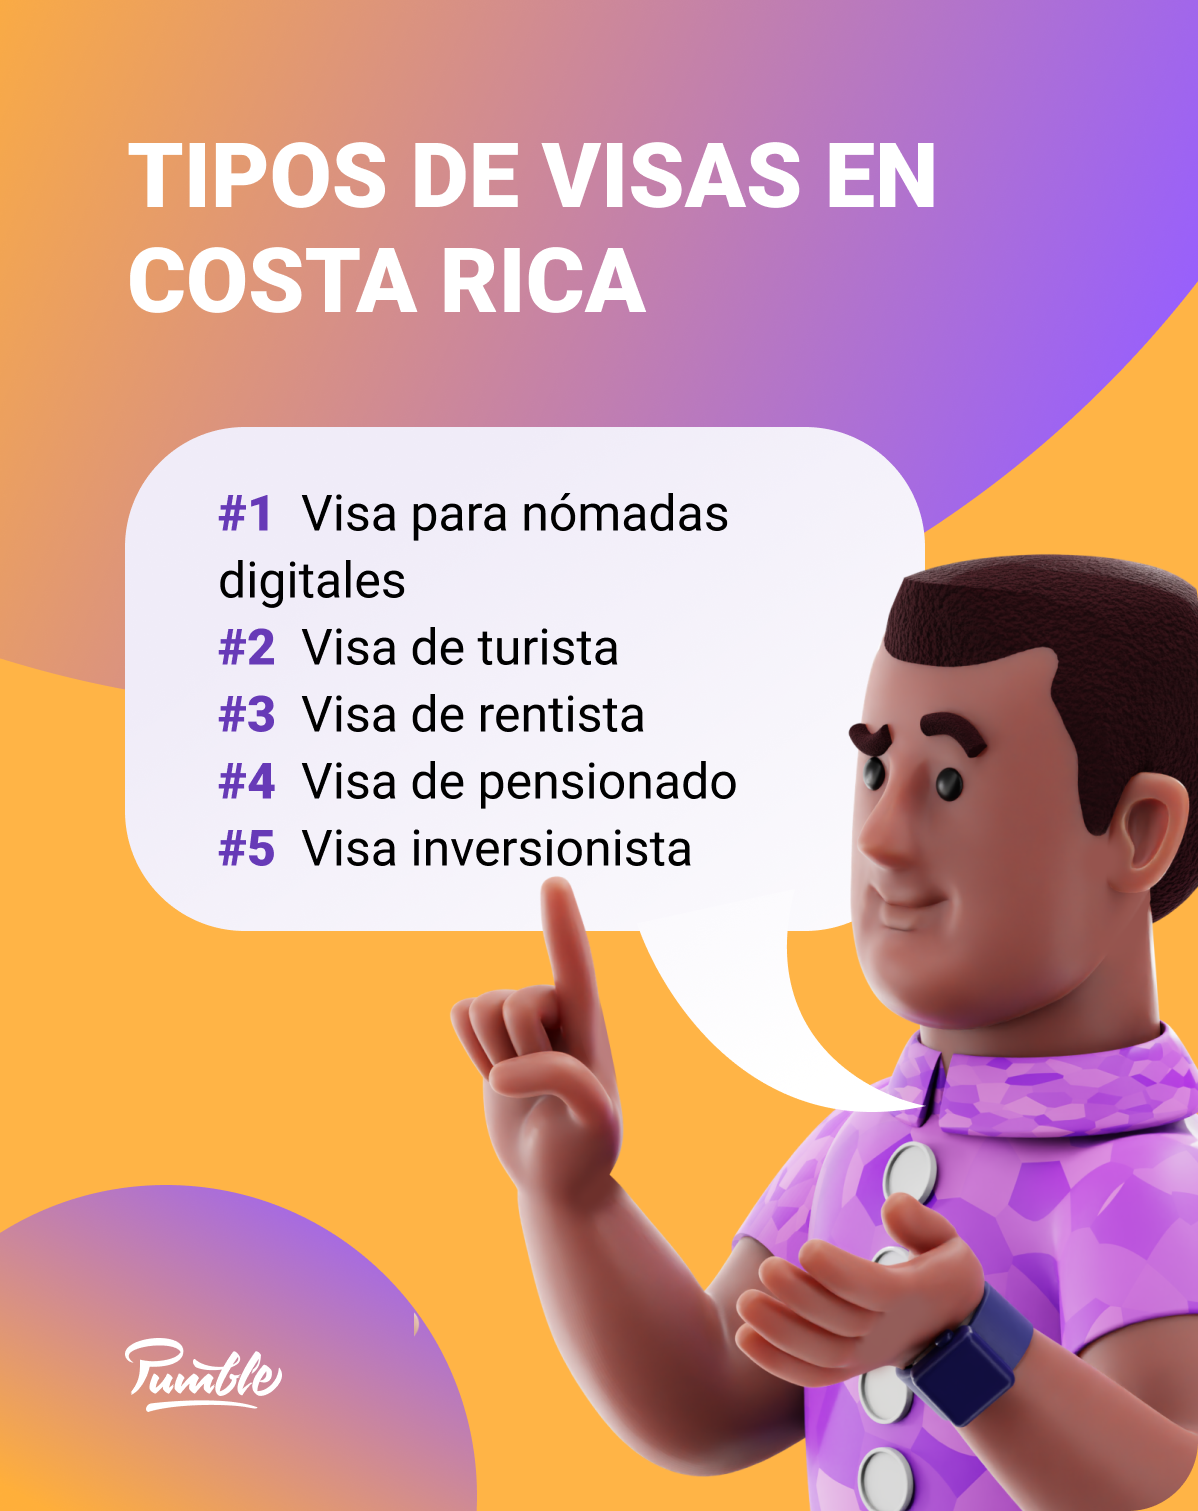 Types of visas in Costa Rica